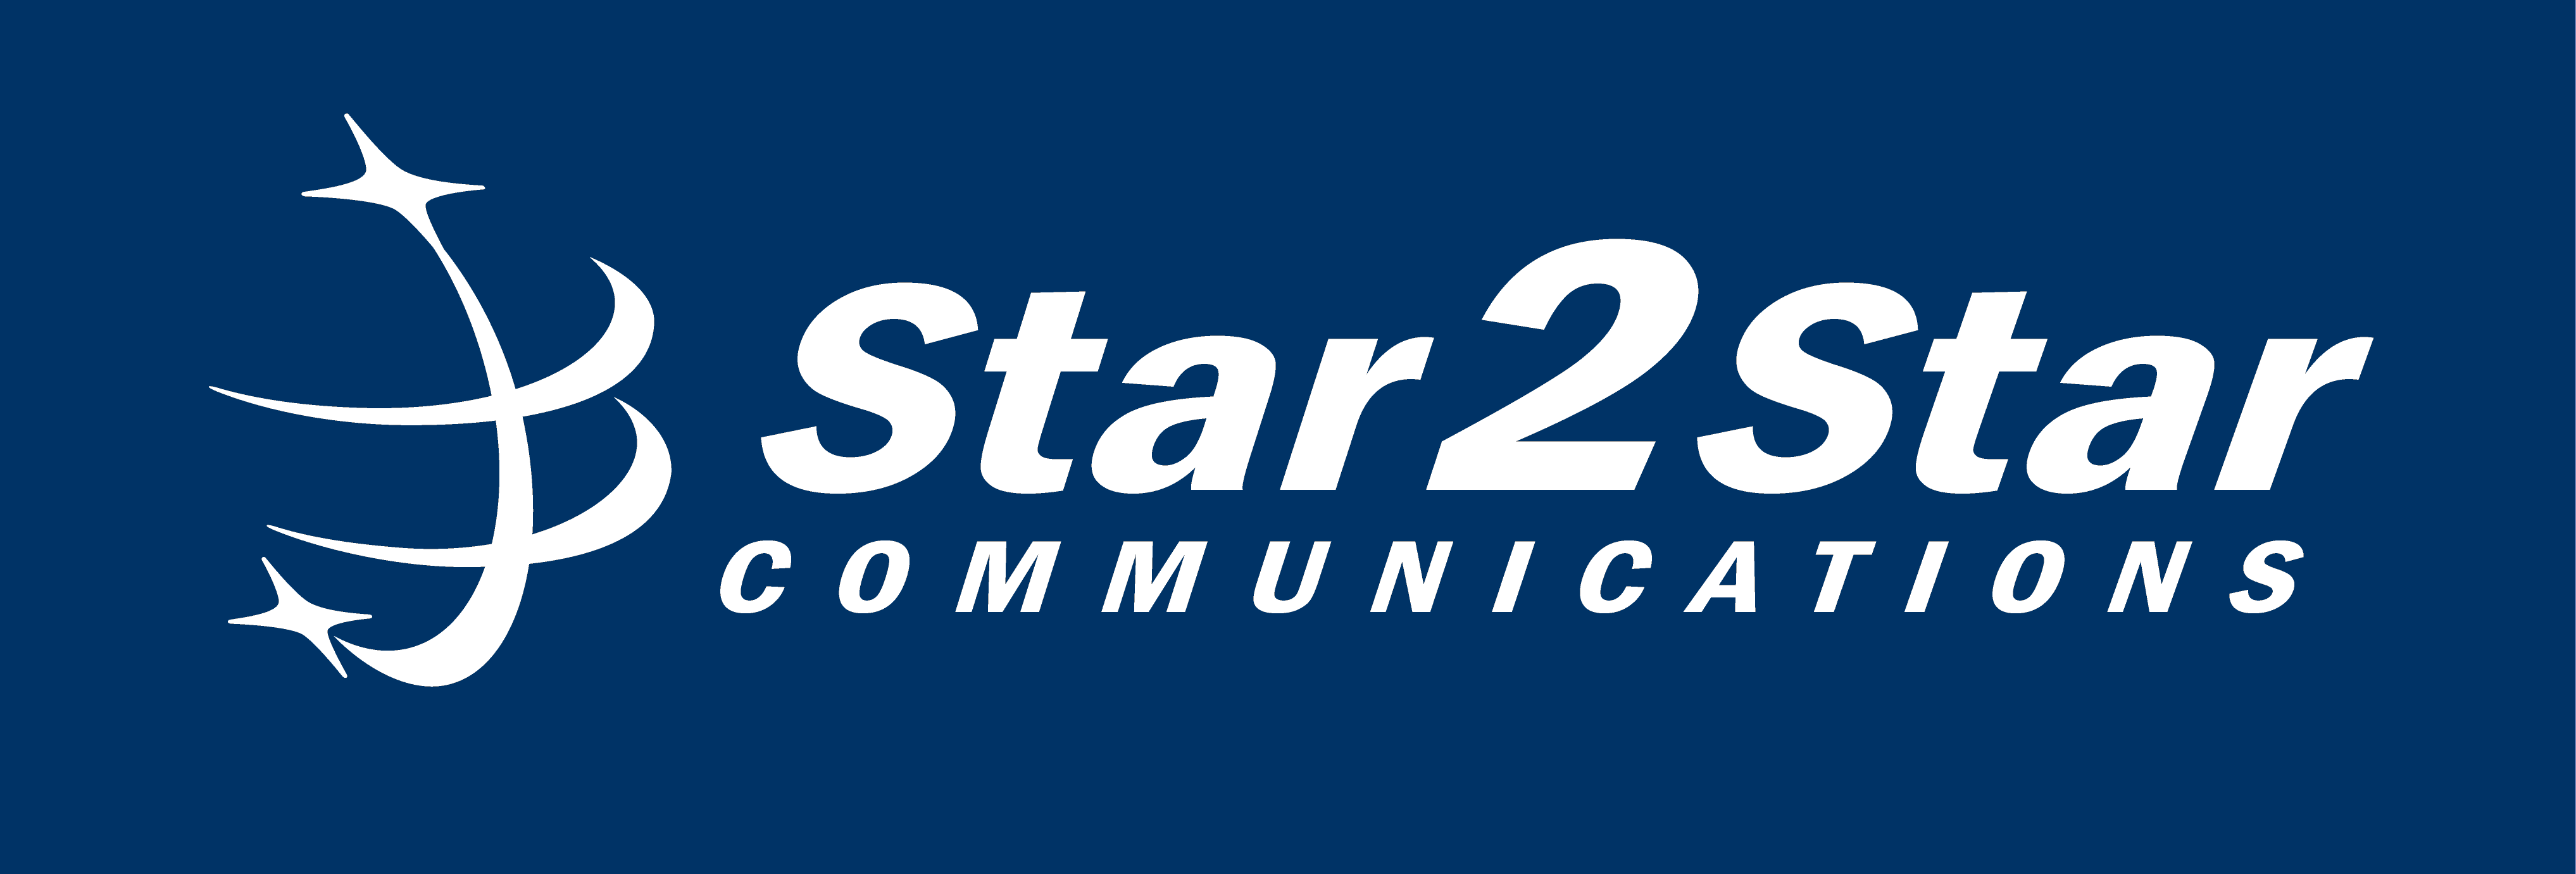 Star2Star-Communications-logo